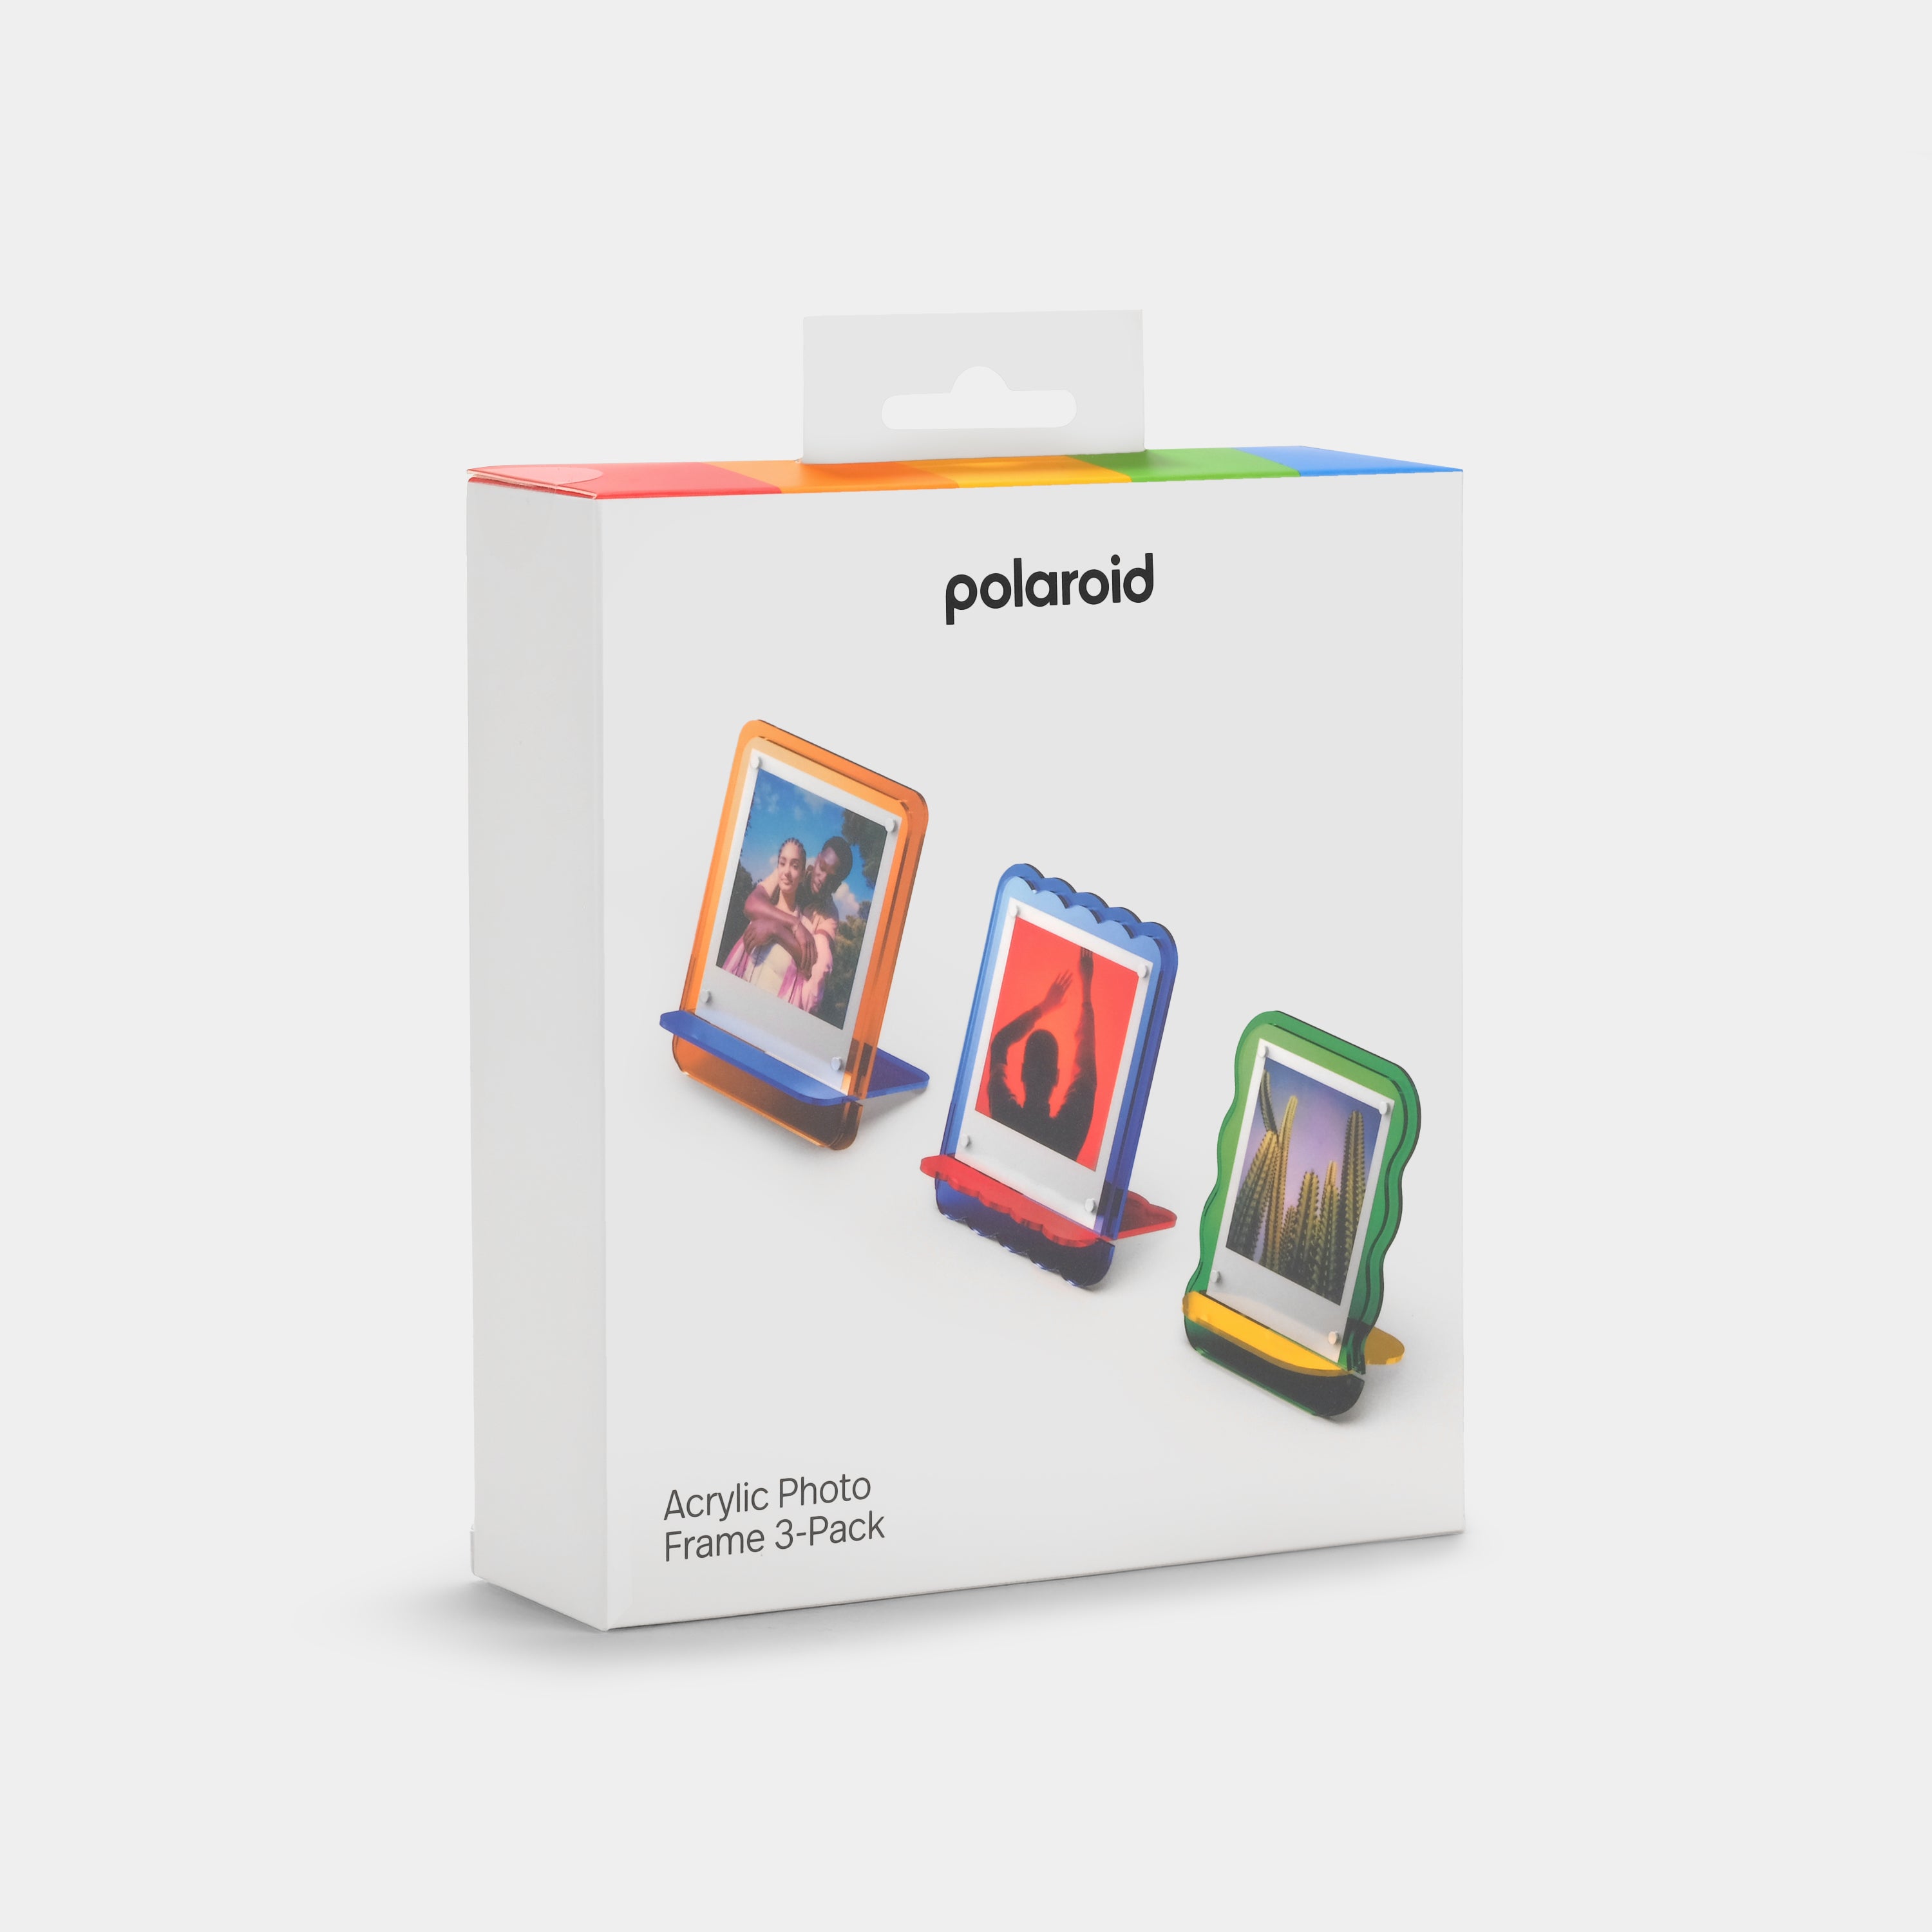 Polaroid Acrylic Photo Frame 3-Pack